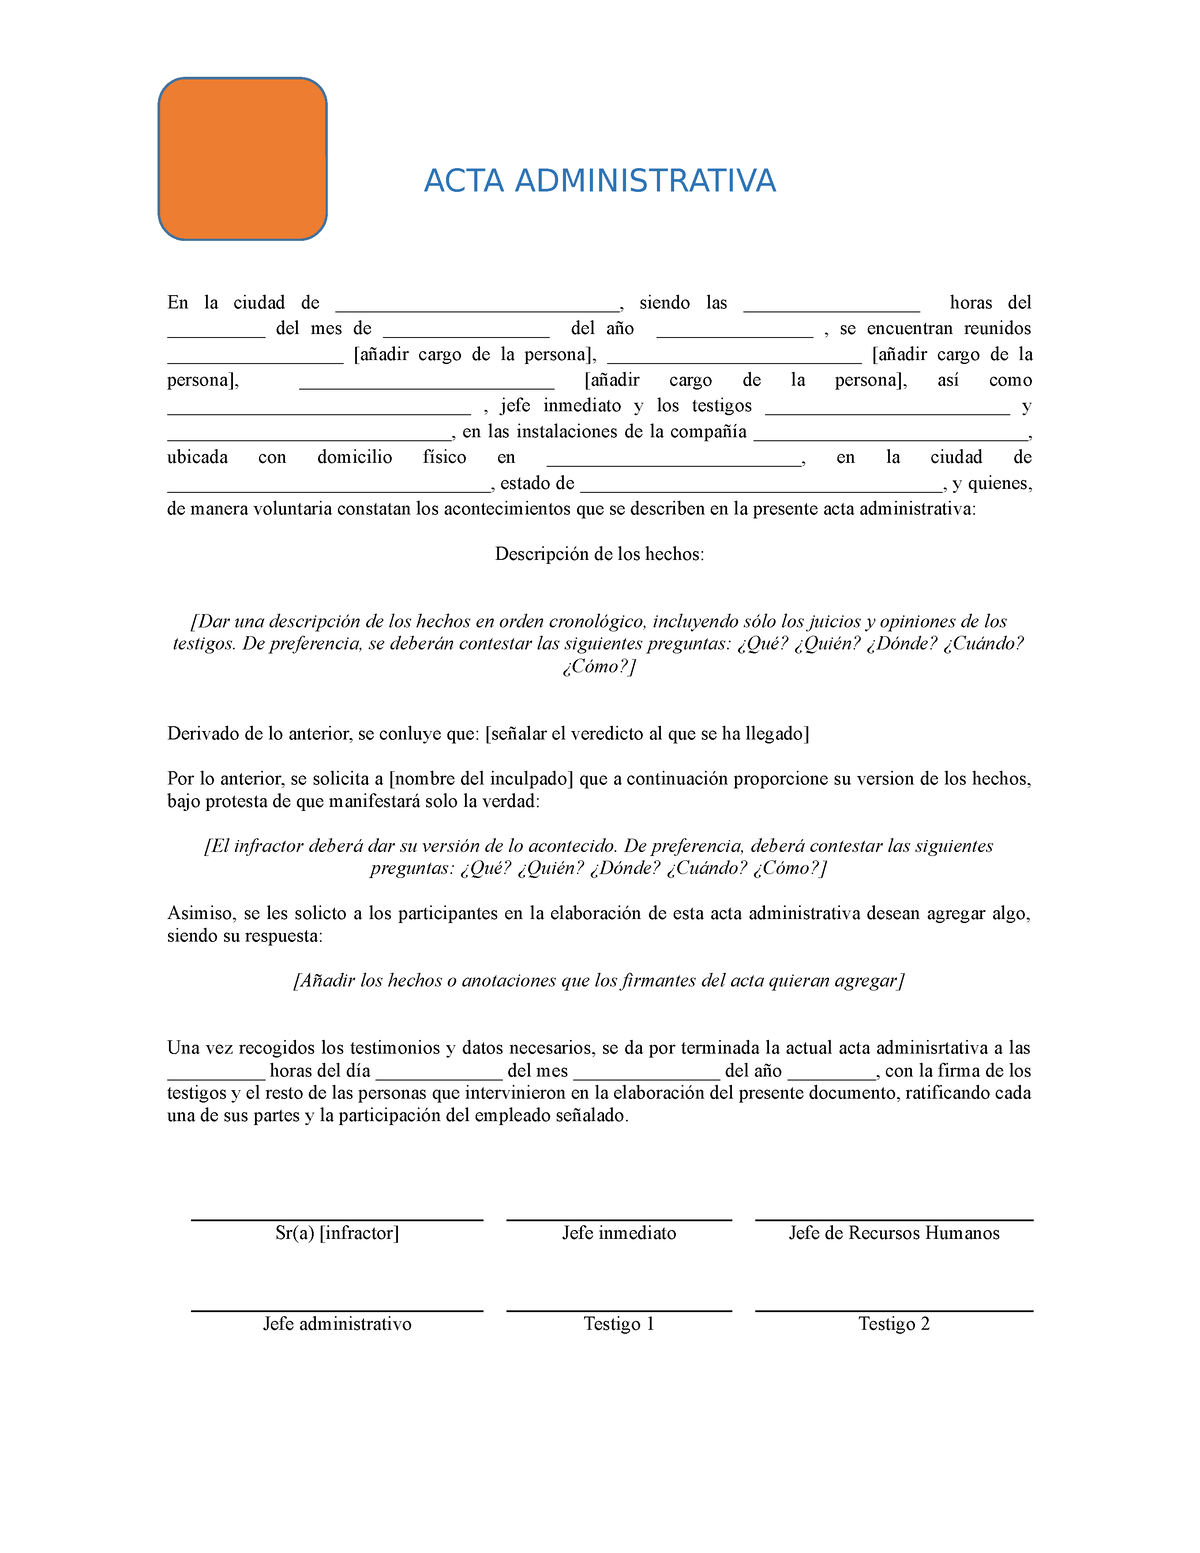 Formato Acta Administrativa Acta Administrativa En La Ciudad De 0096